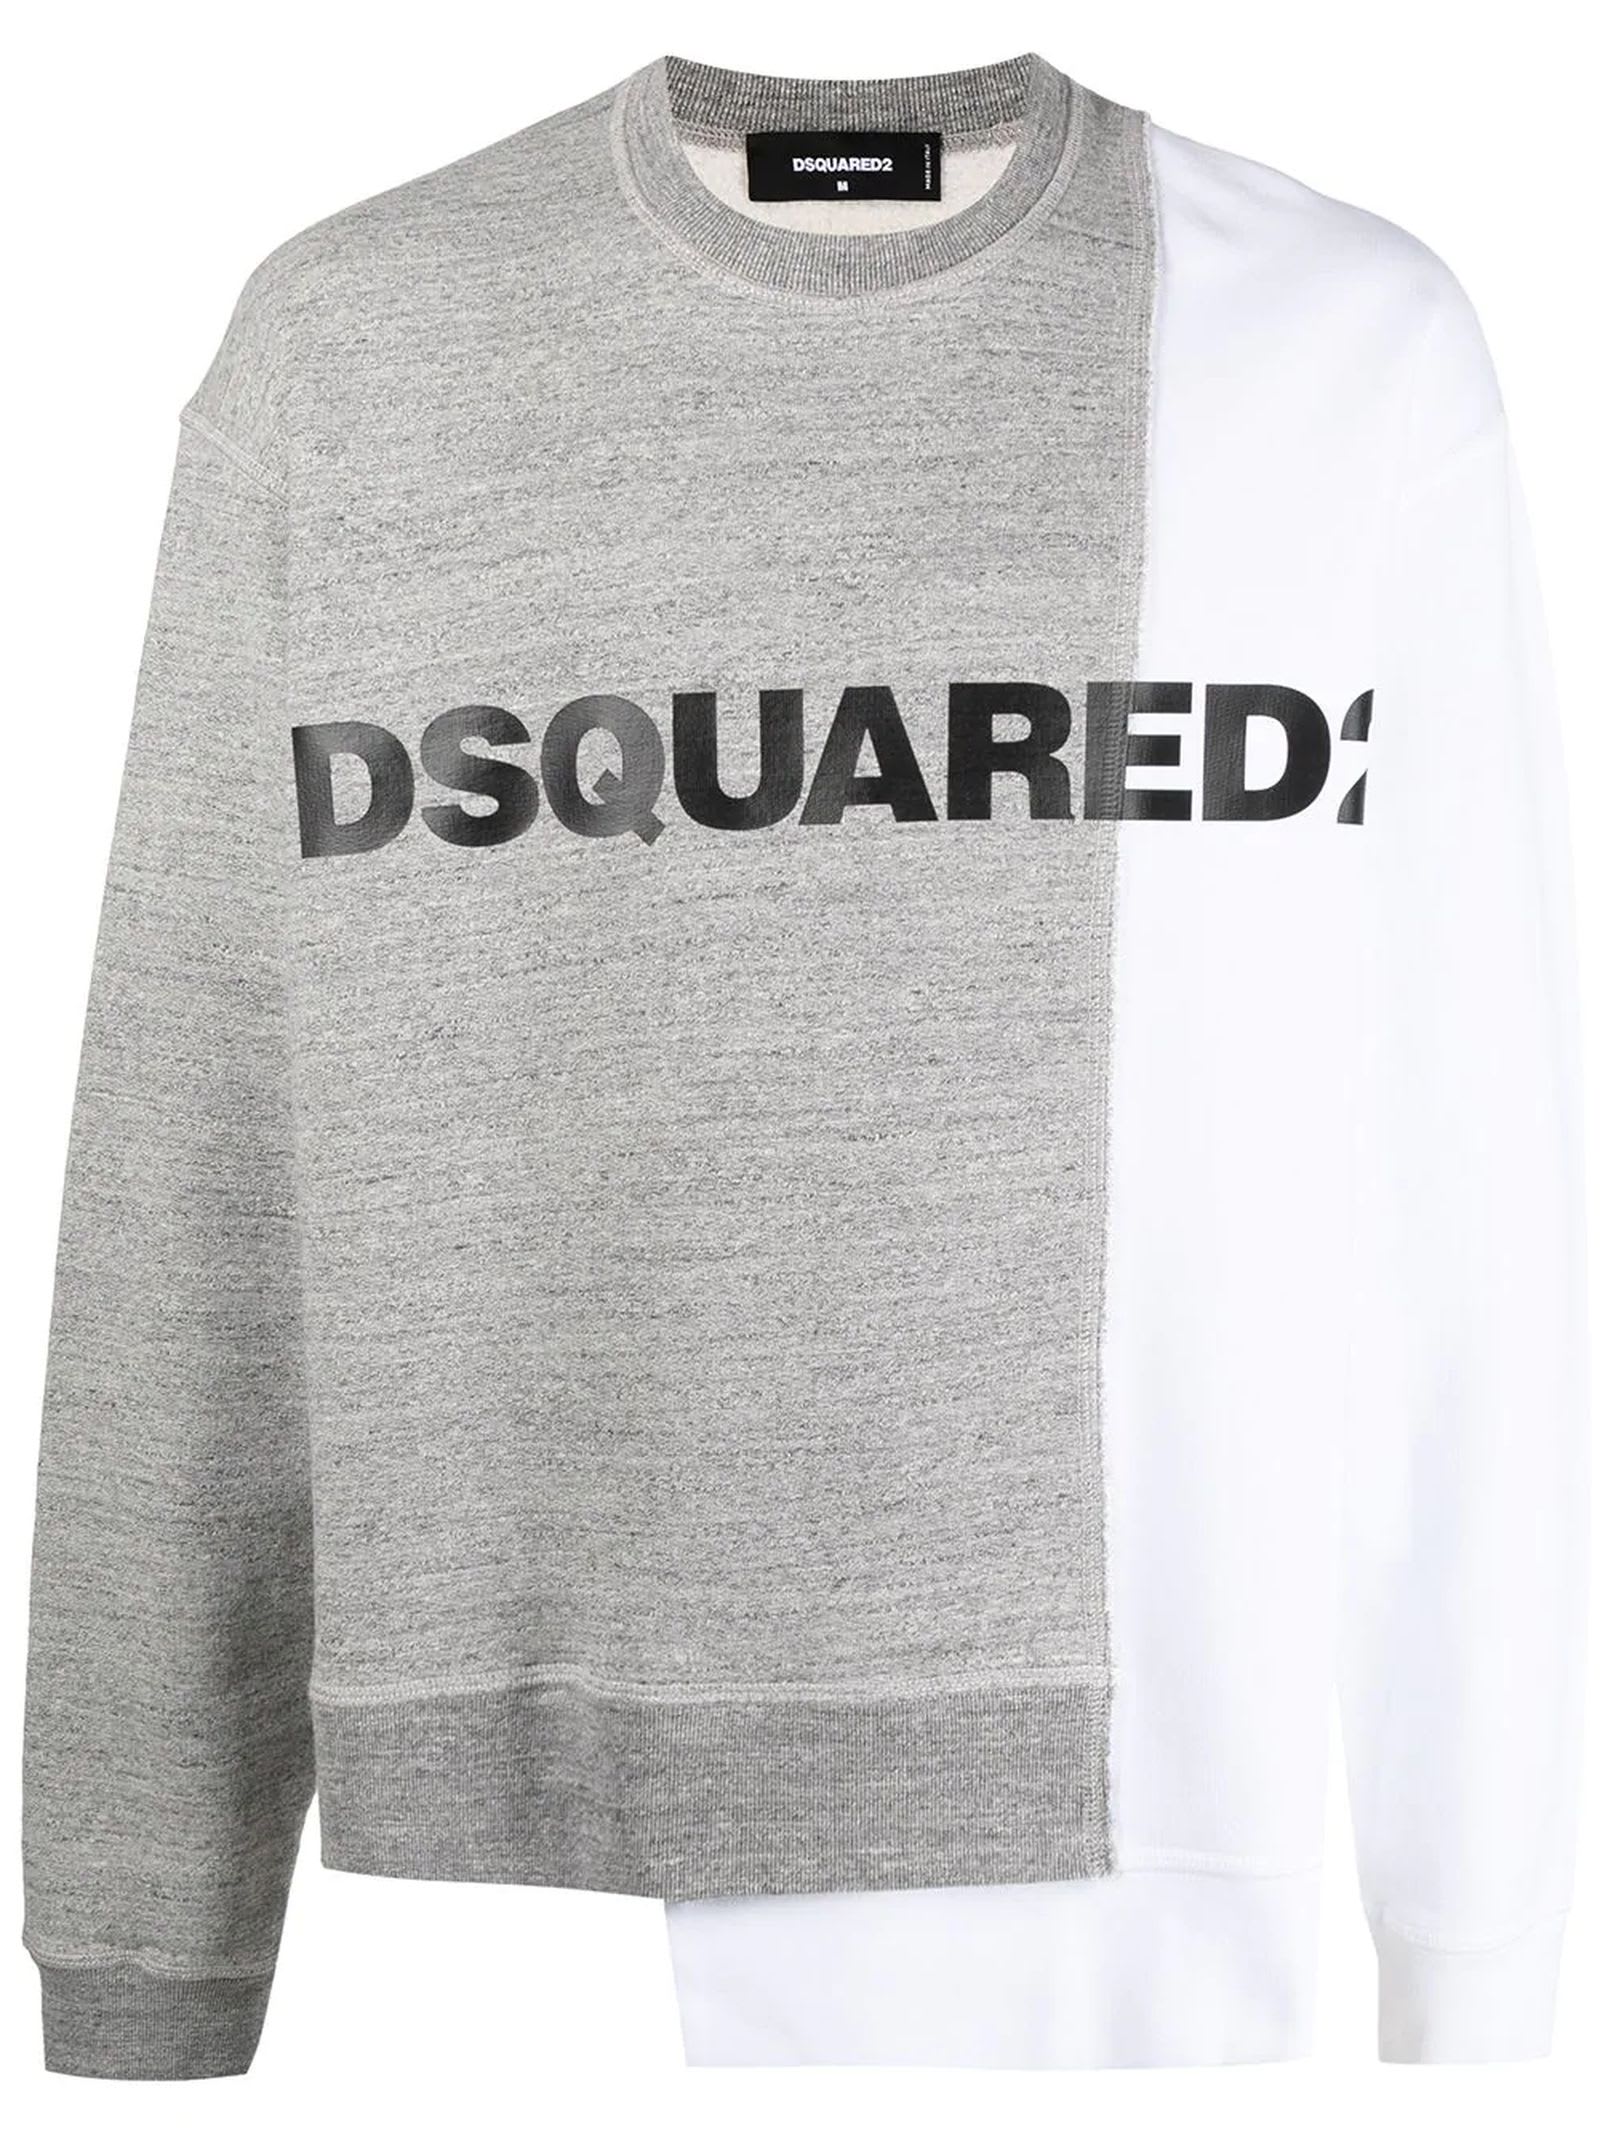 Dsquared2 Grey And White Sweatshirt